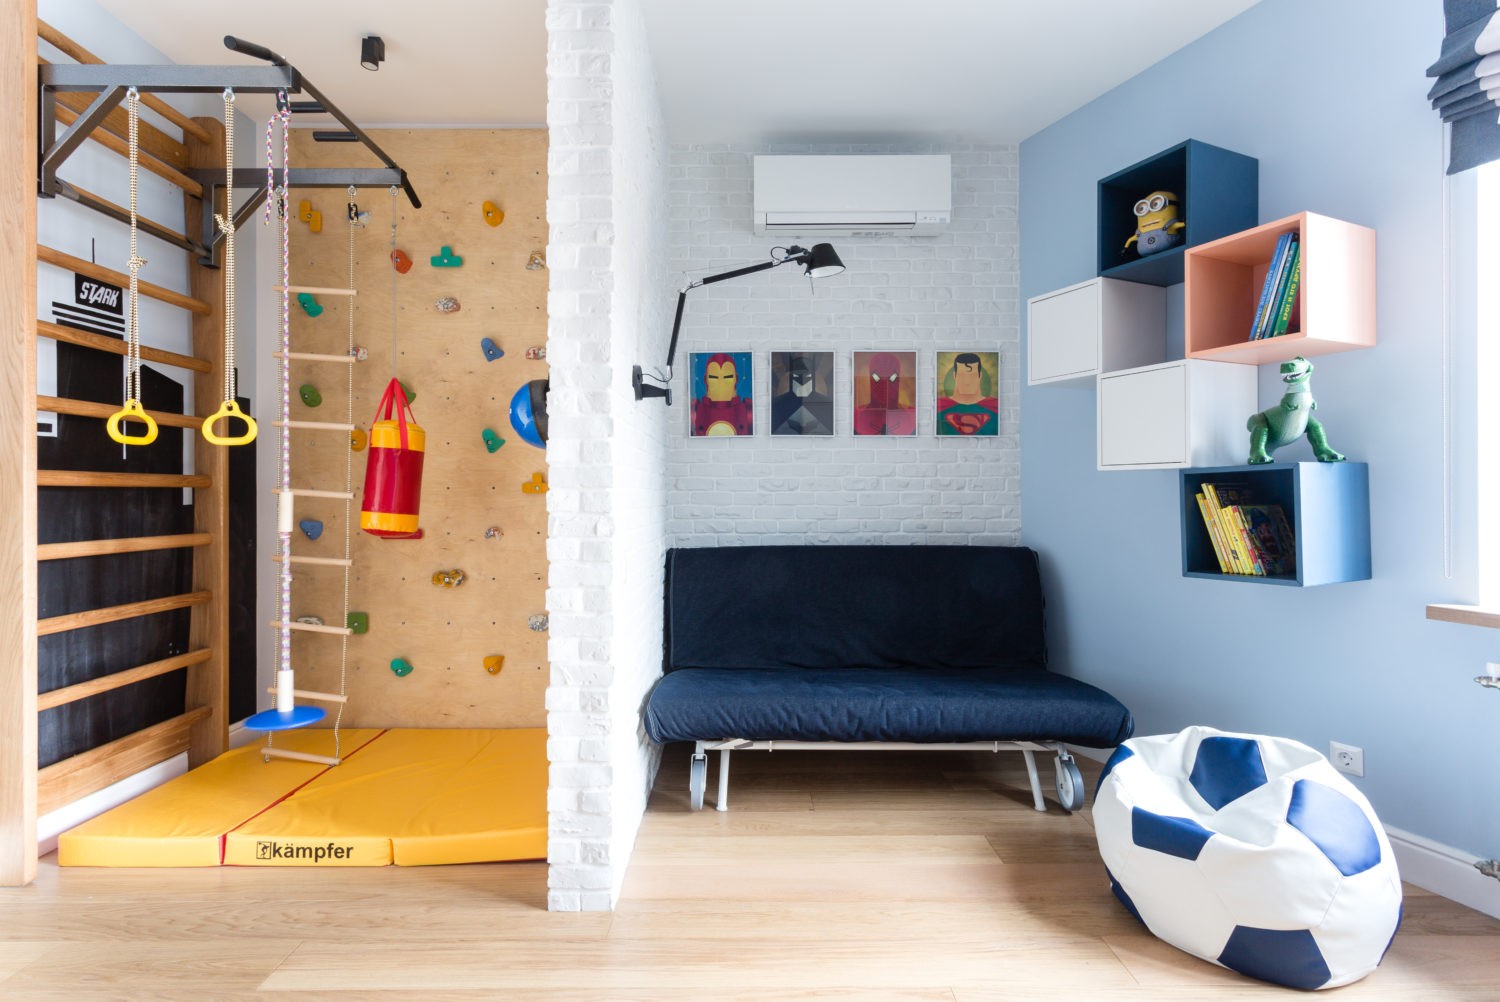 шведская стенка в квартире дизайн